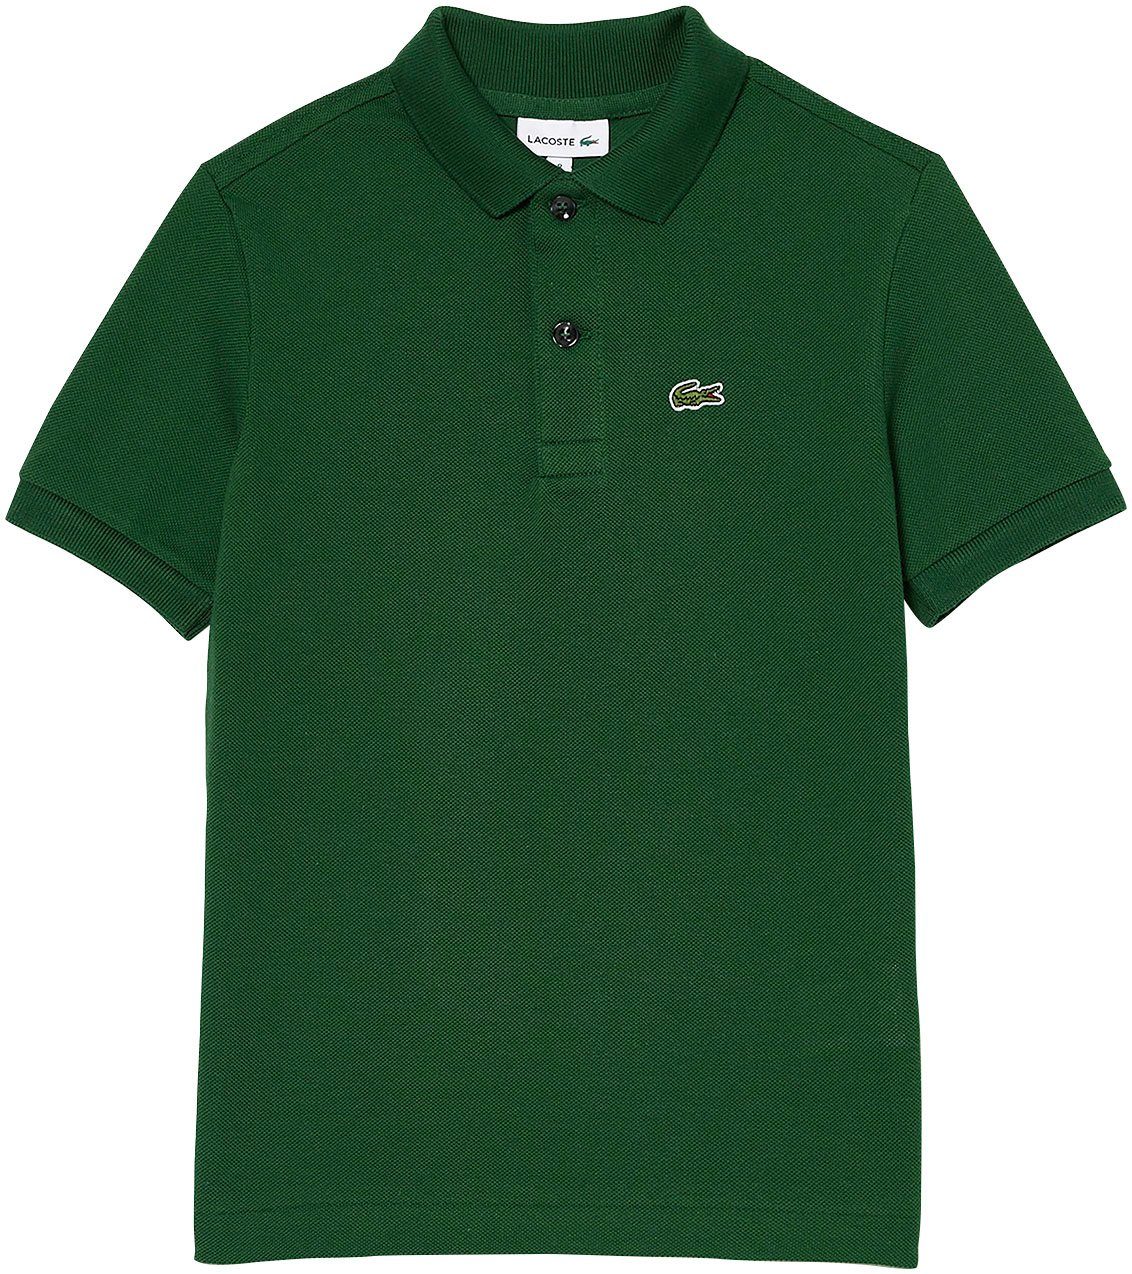 Kroko Kinder Kids mit Lacoste aufgesticktem MiniMe,Junior, Polo Kids grün Junior Poloshirt